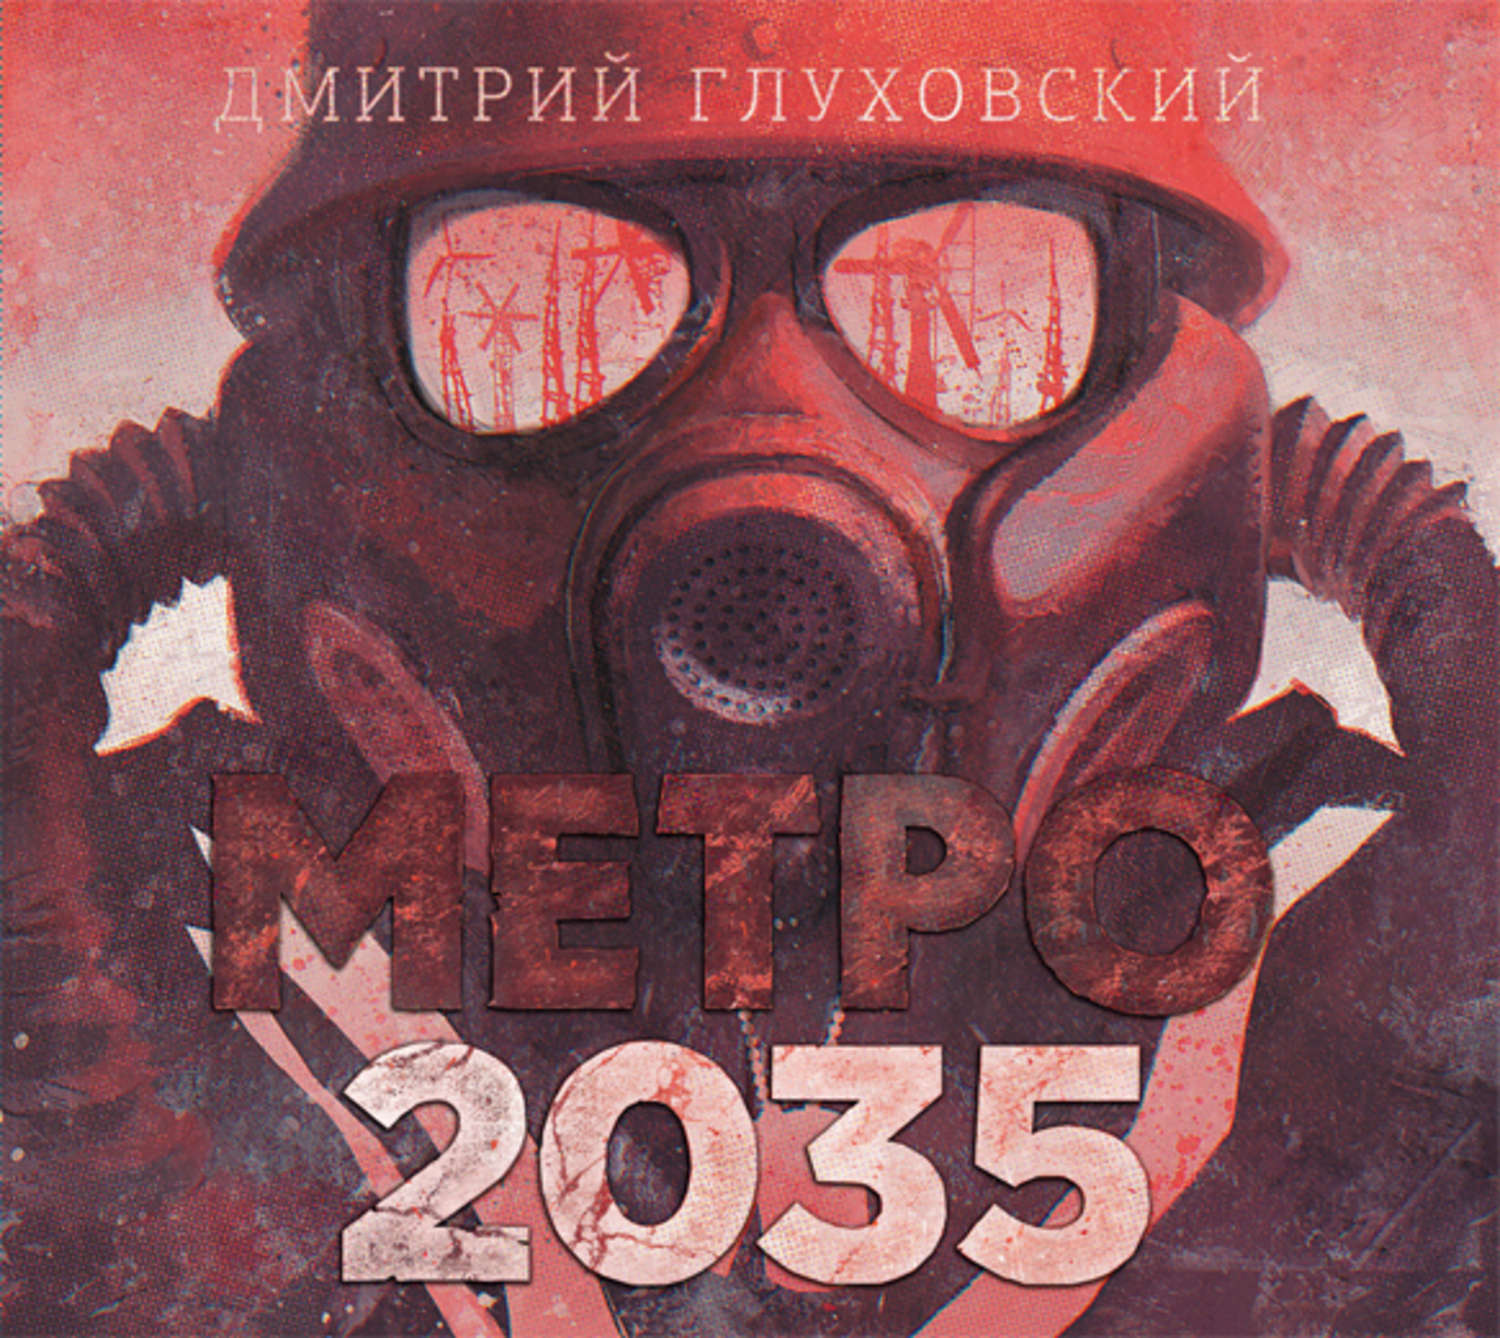 Метро 2034 аудиокнига mp3 скачать